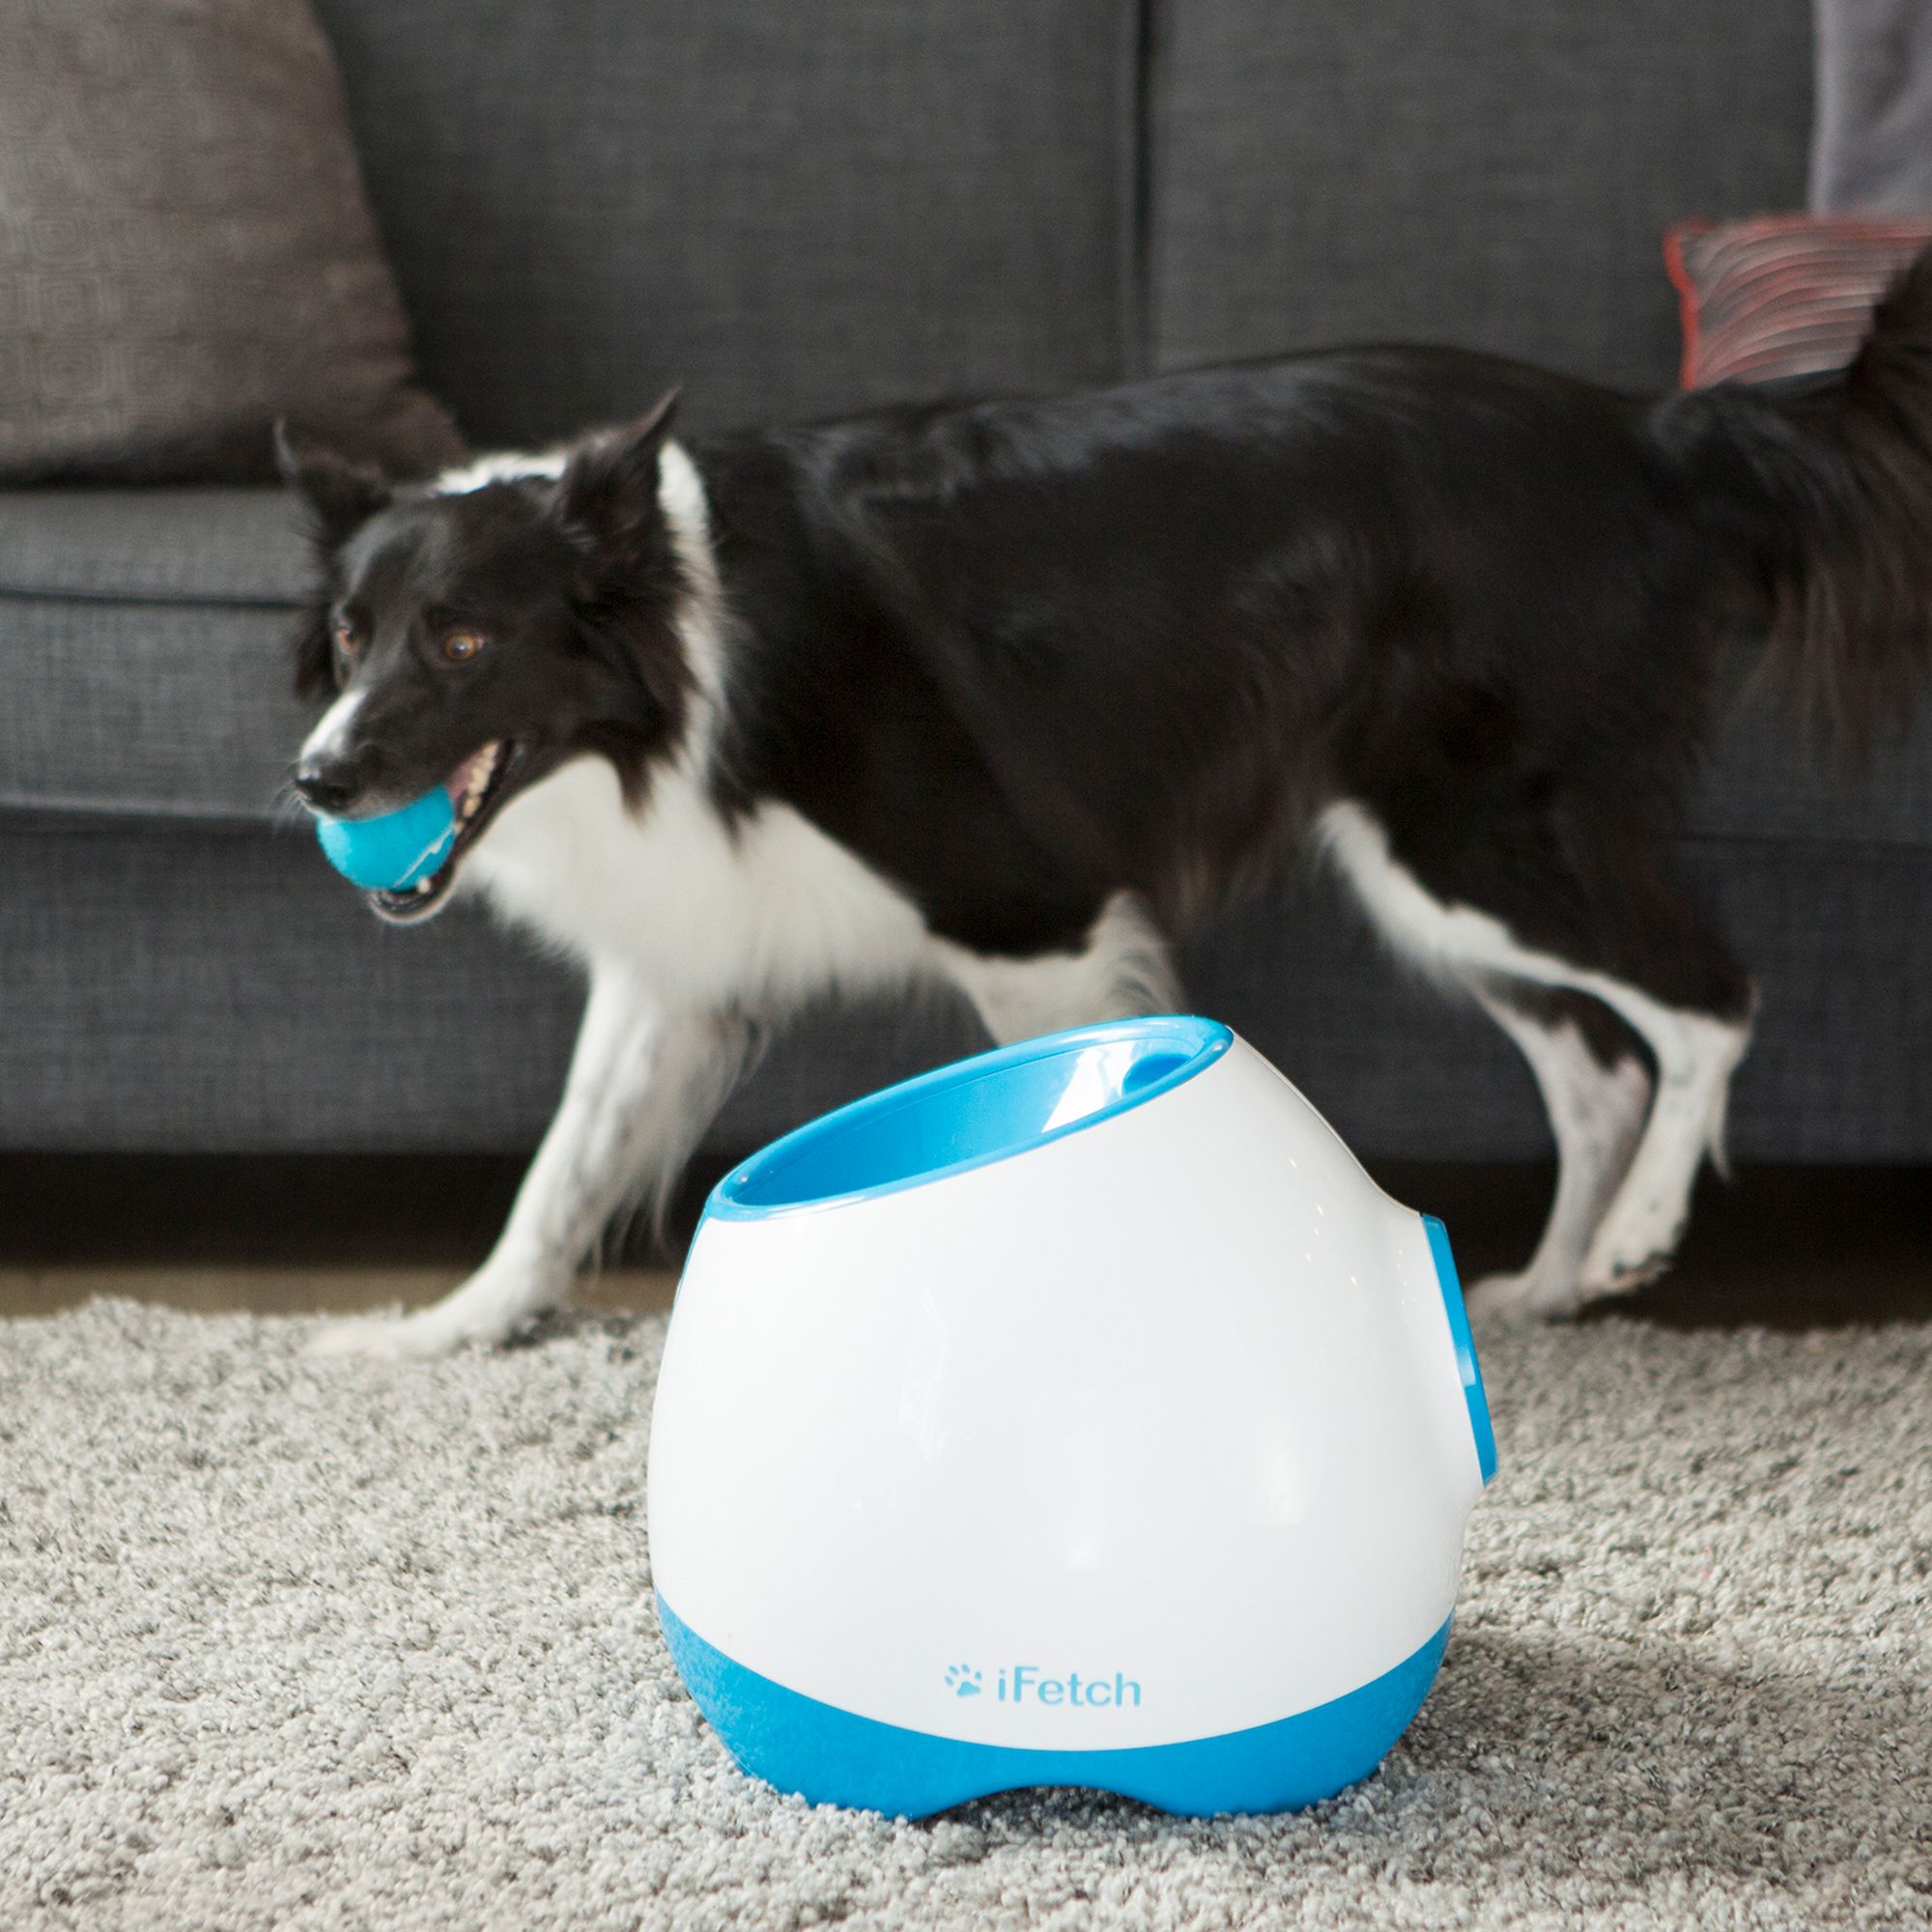 ifetch interactive dog ball launcher